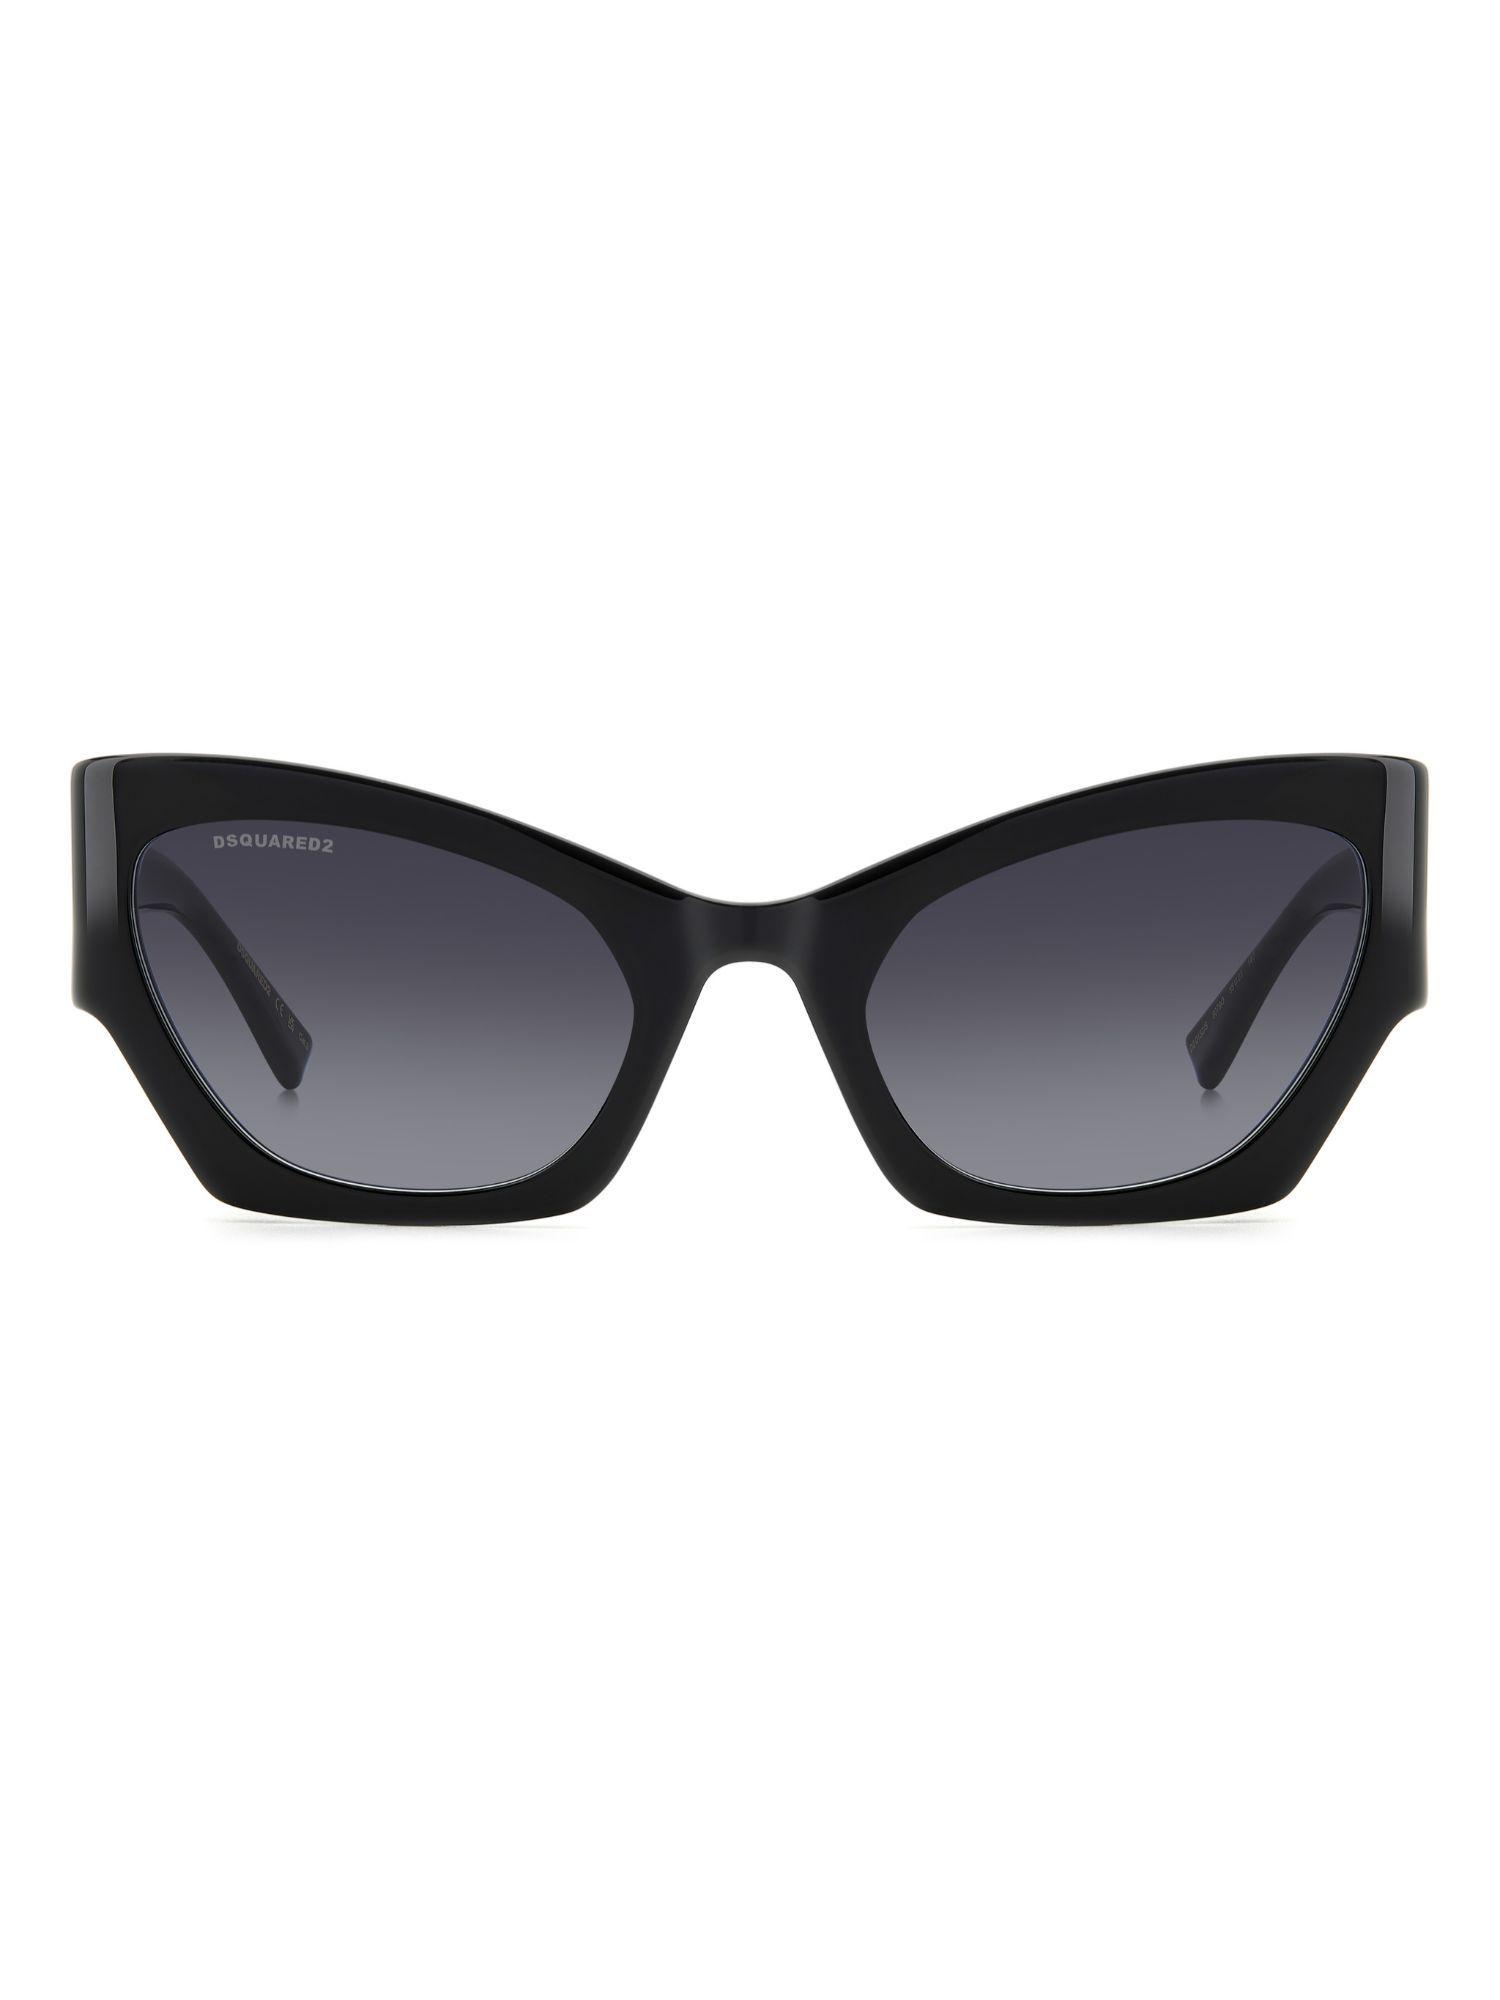 womens dark grey shaded lens black cat eye sunglasses with 100% uv protection (55)